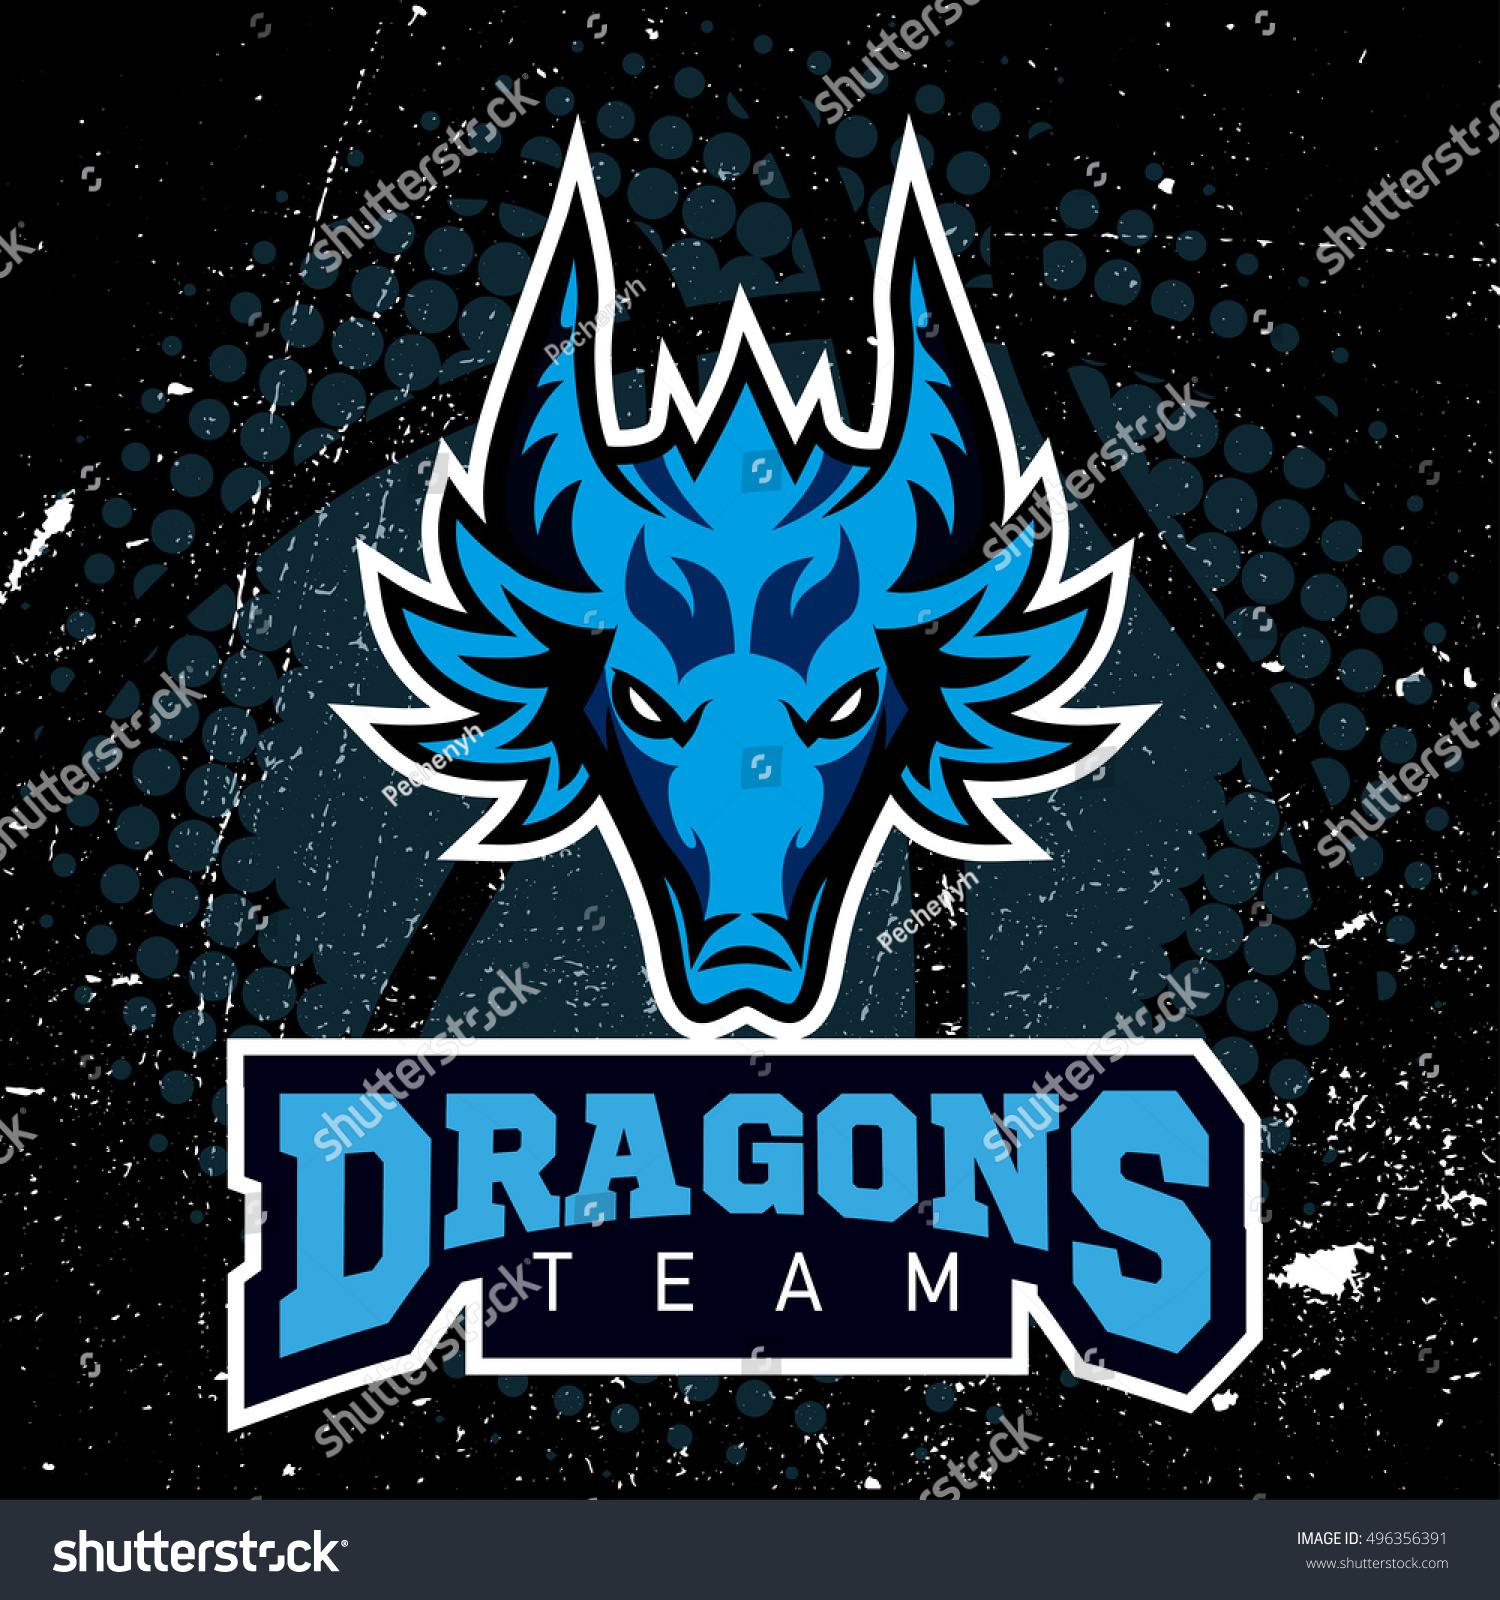 Dragon sports network